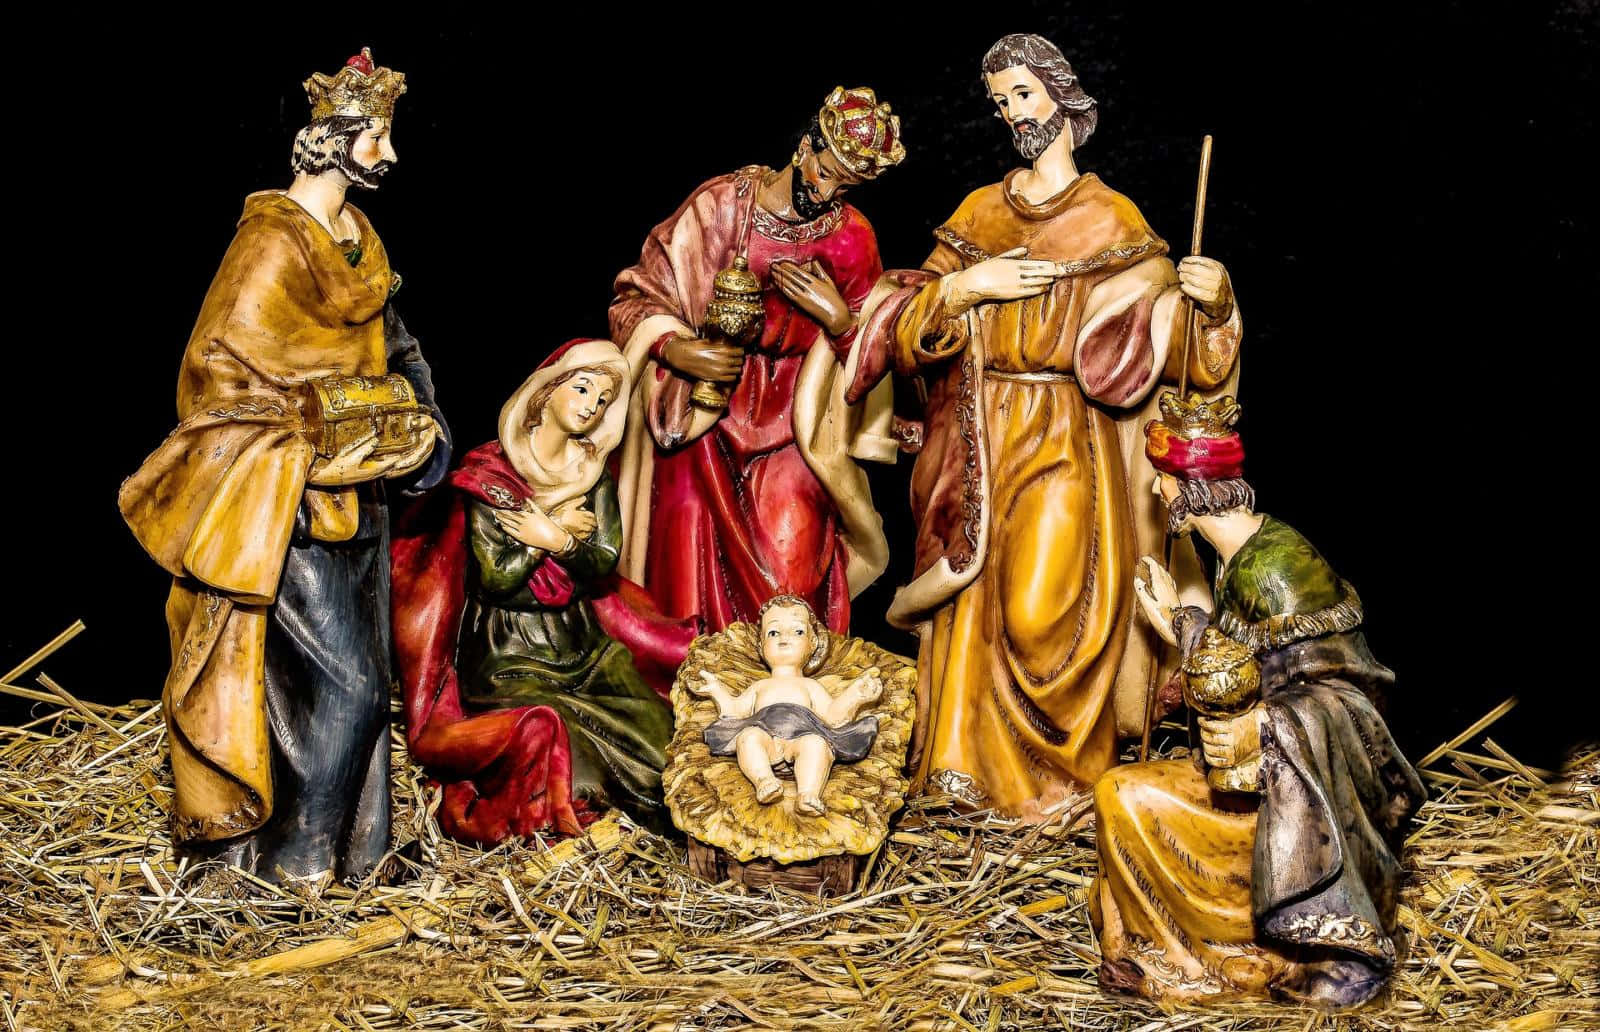 A nativity scene depicting the life of Jesus